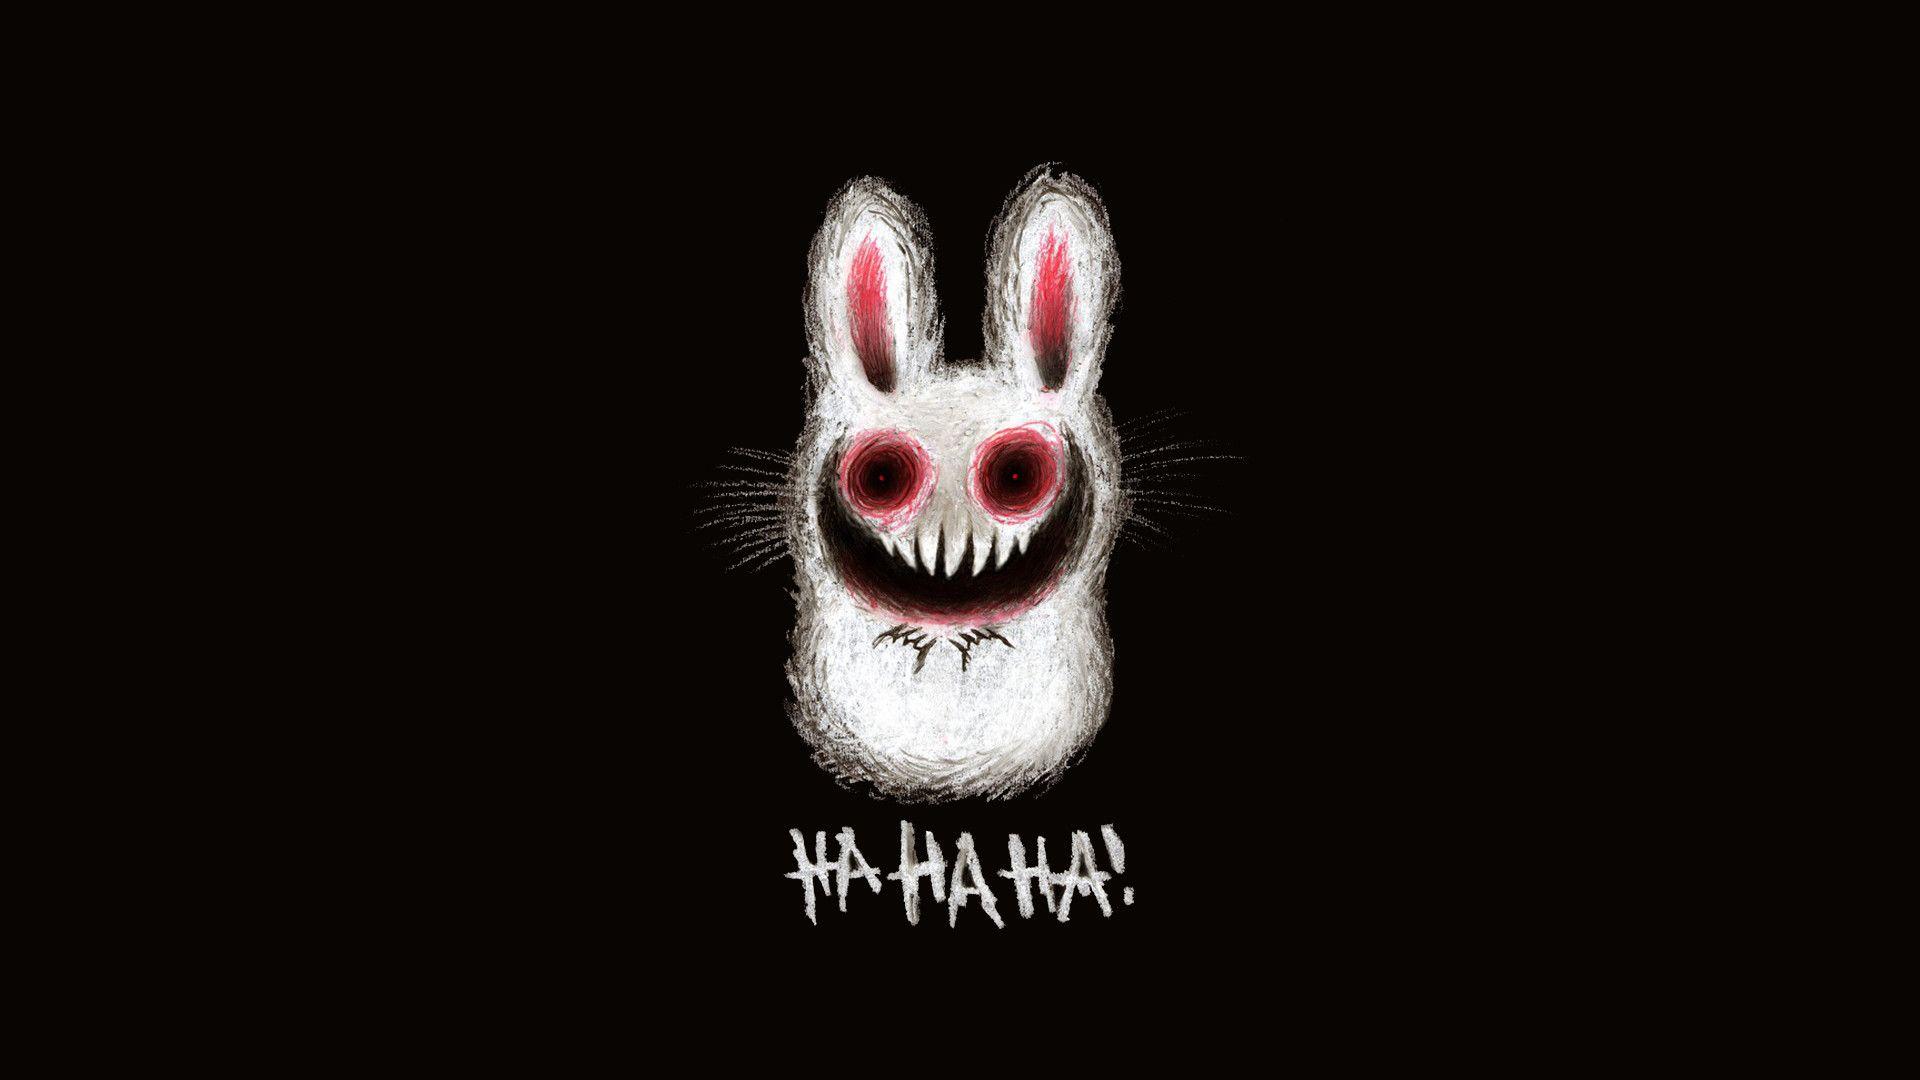 Creepy bunny wallpaper, cute adorable fluffy scary bunny